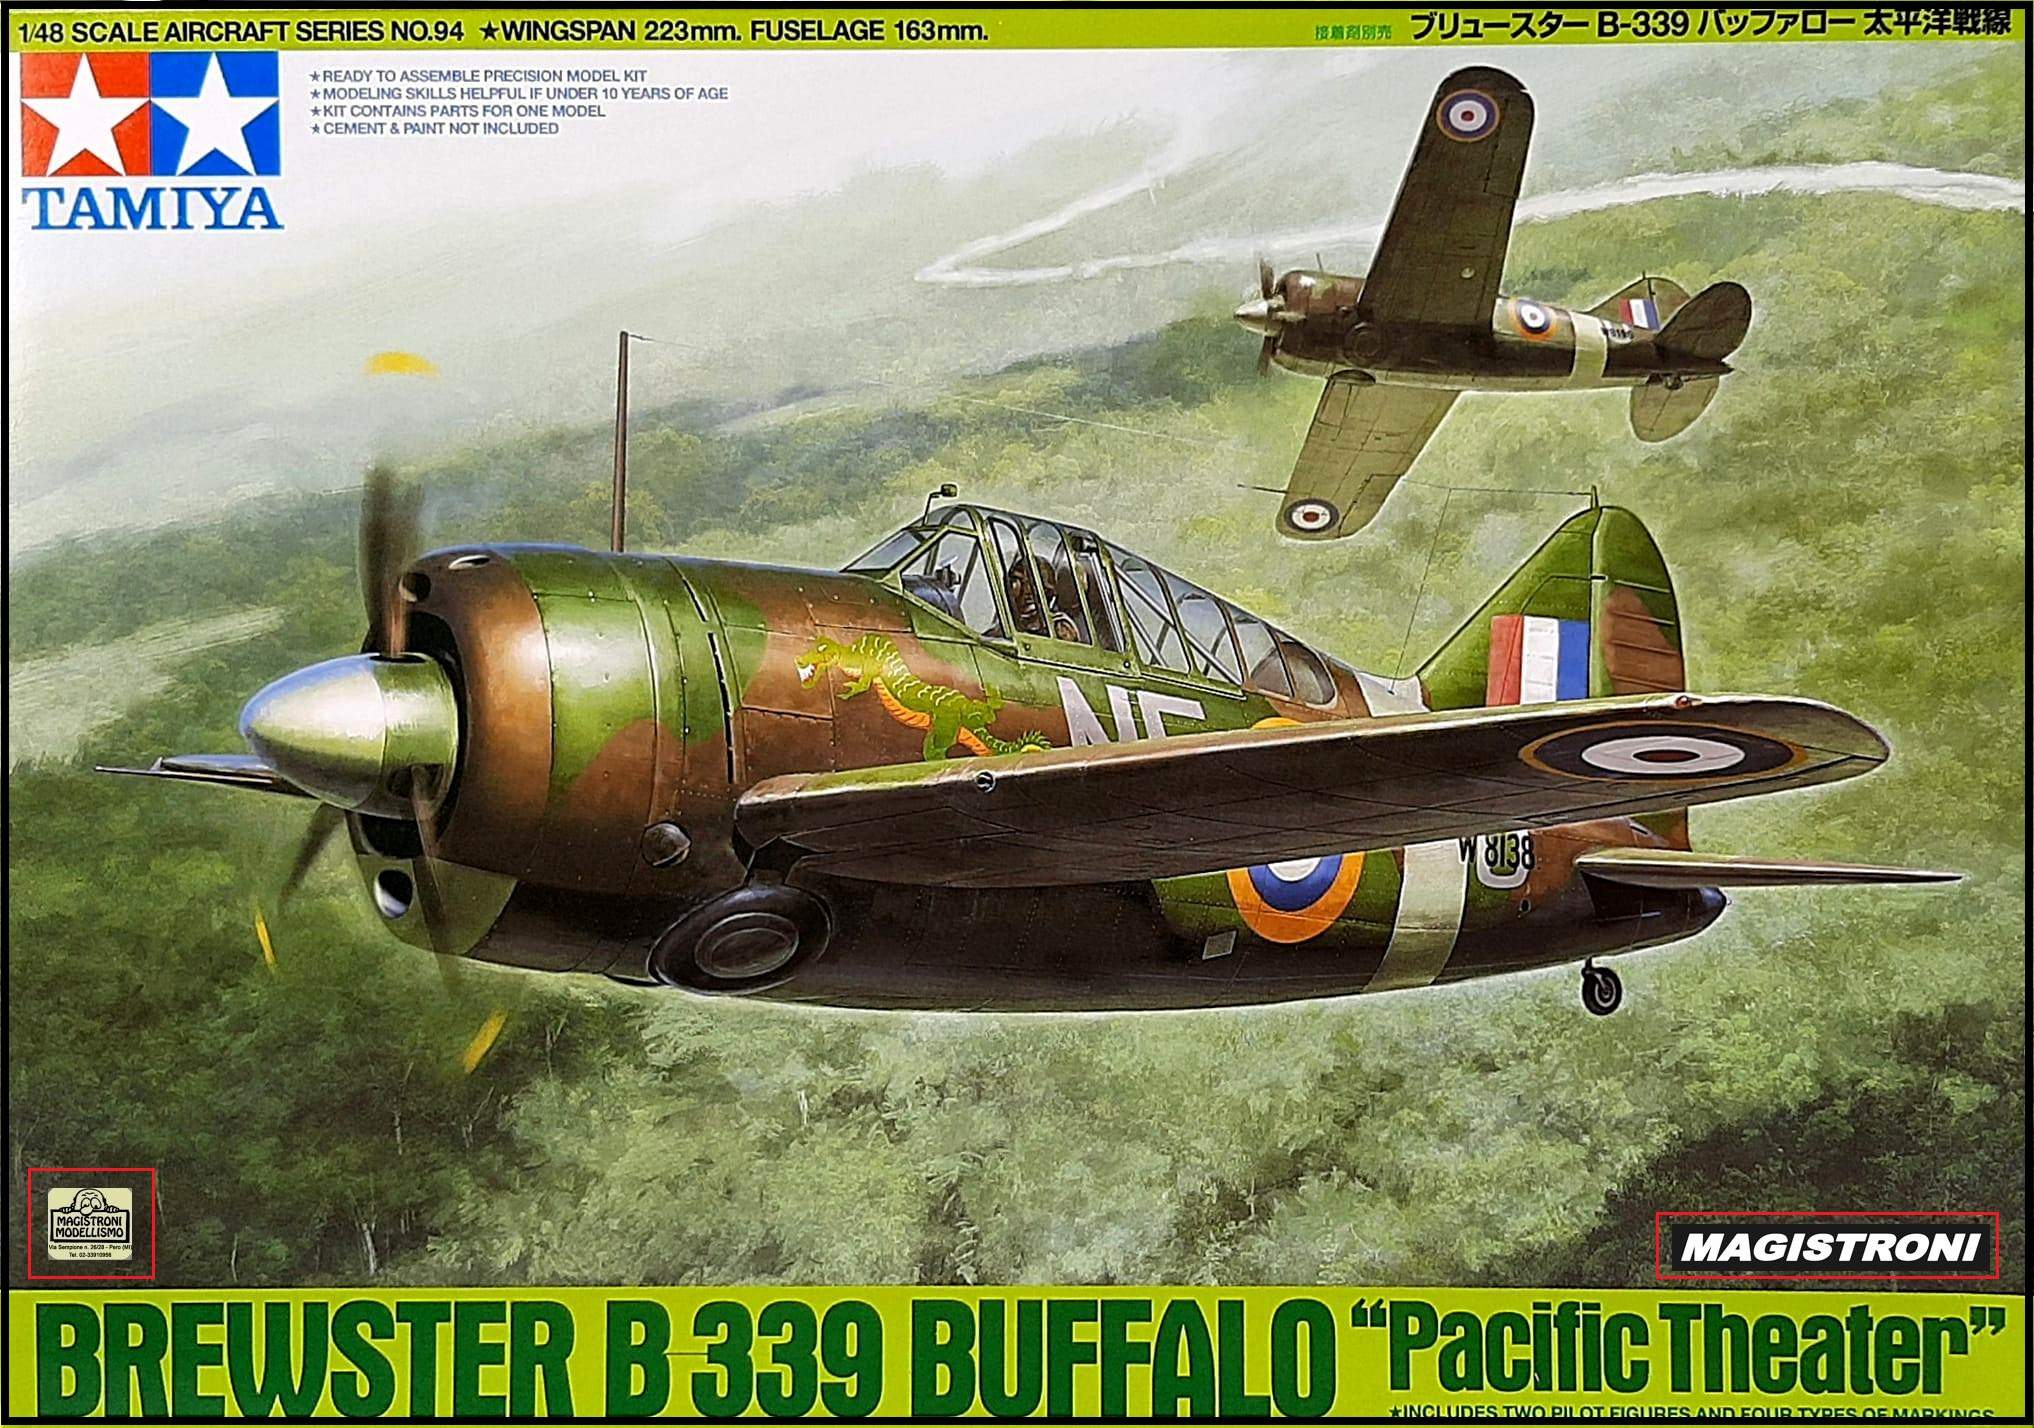 BREWSTER B339 BUFFALO "Pacific Theater"